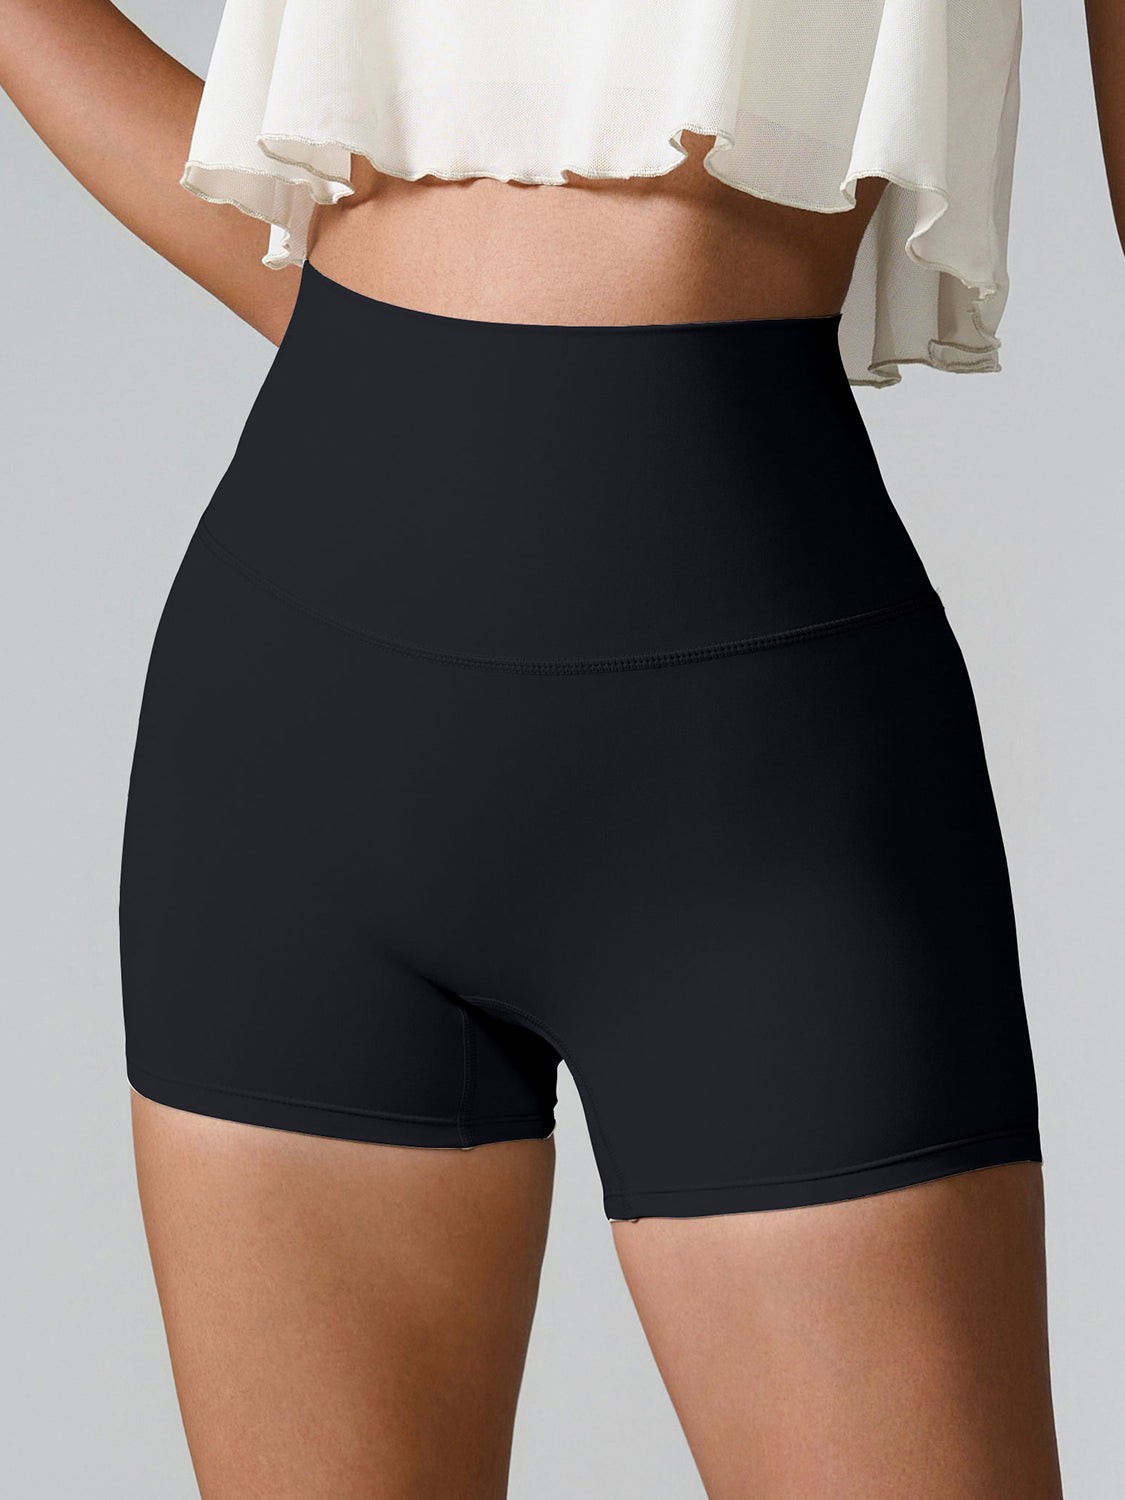 High Rise Athletic Shorts Wide Waistband Back Pocket Yoga Activewear